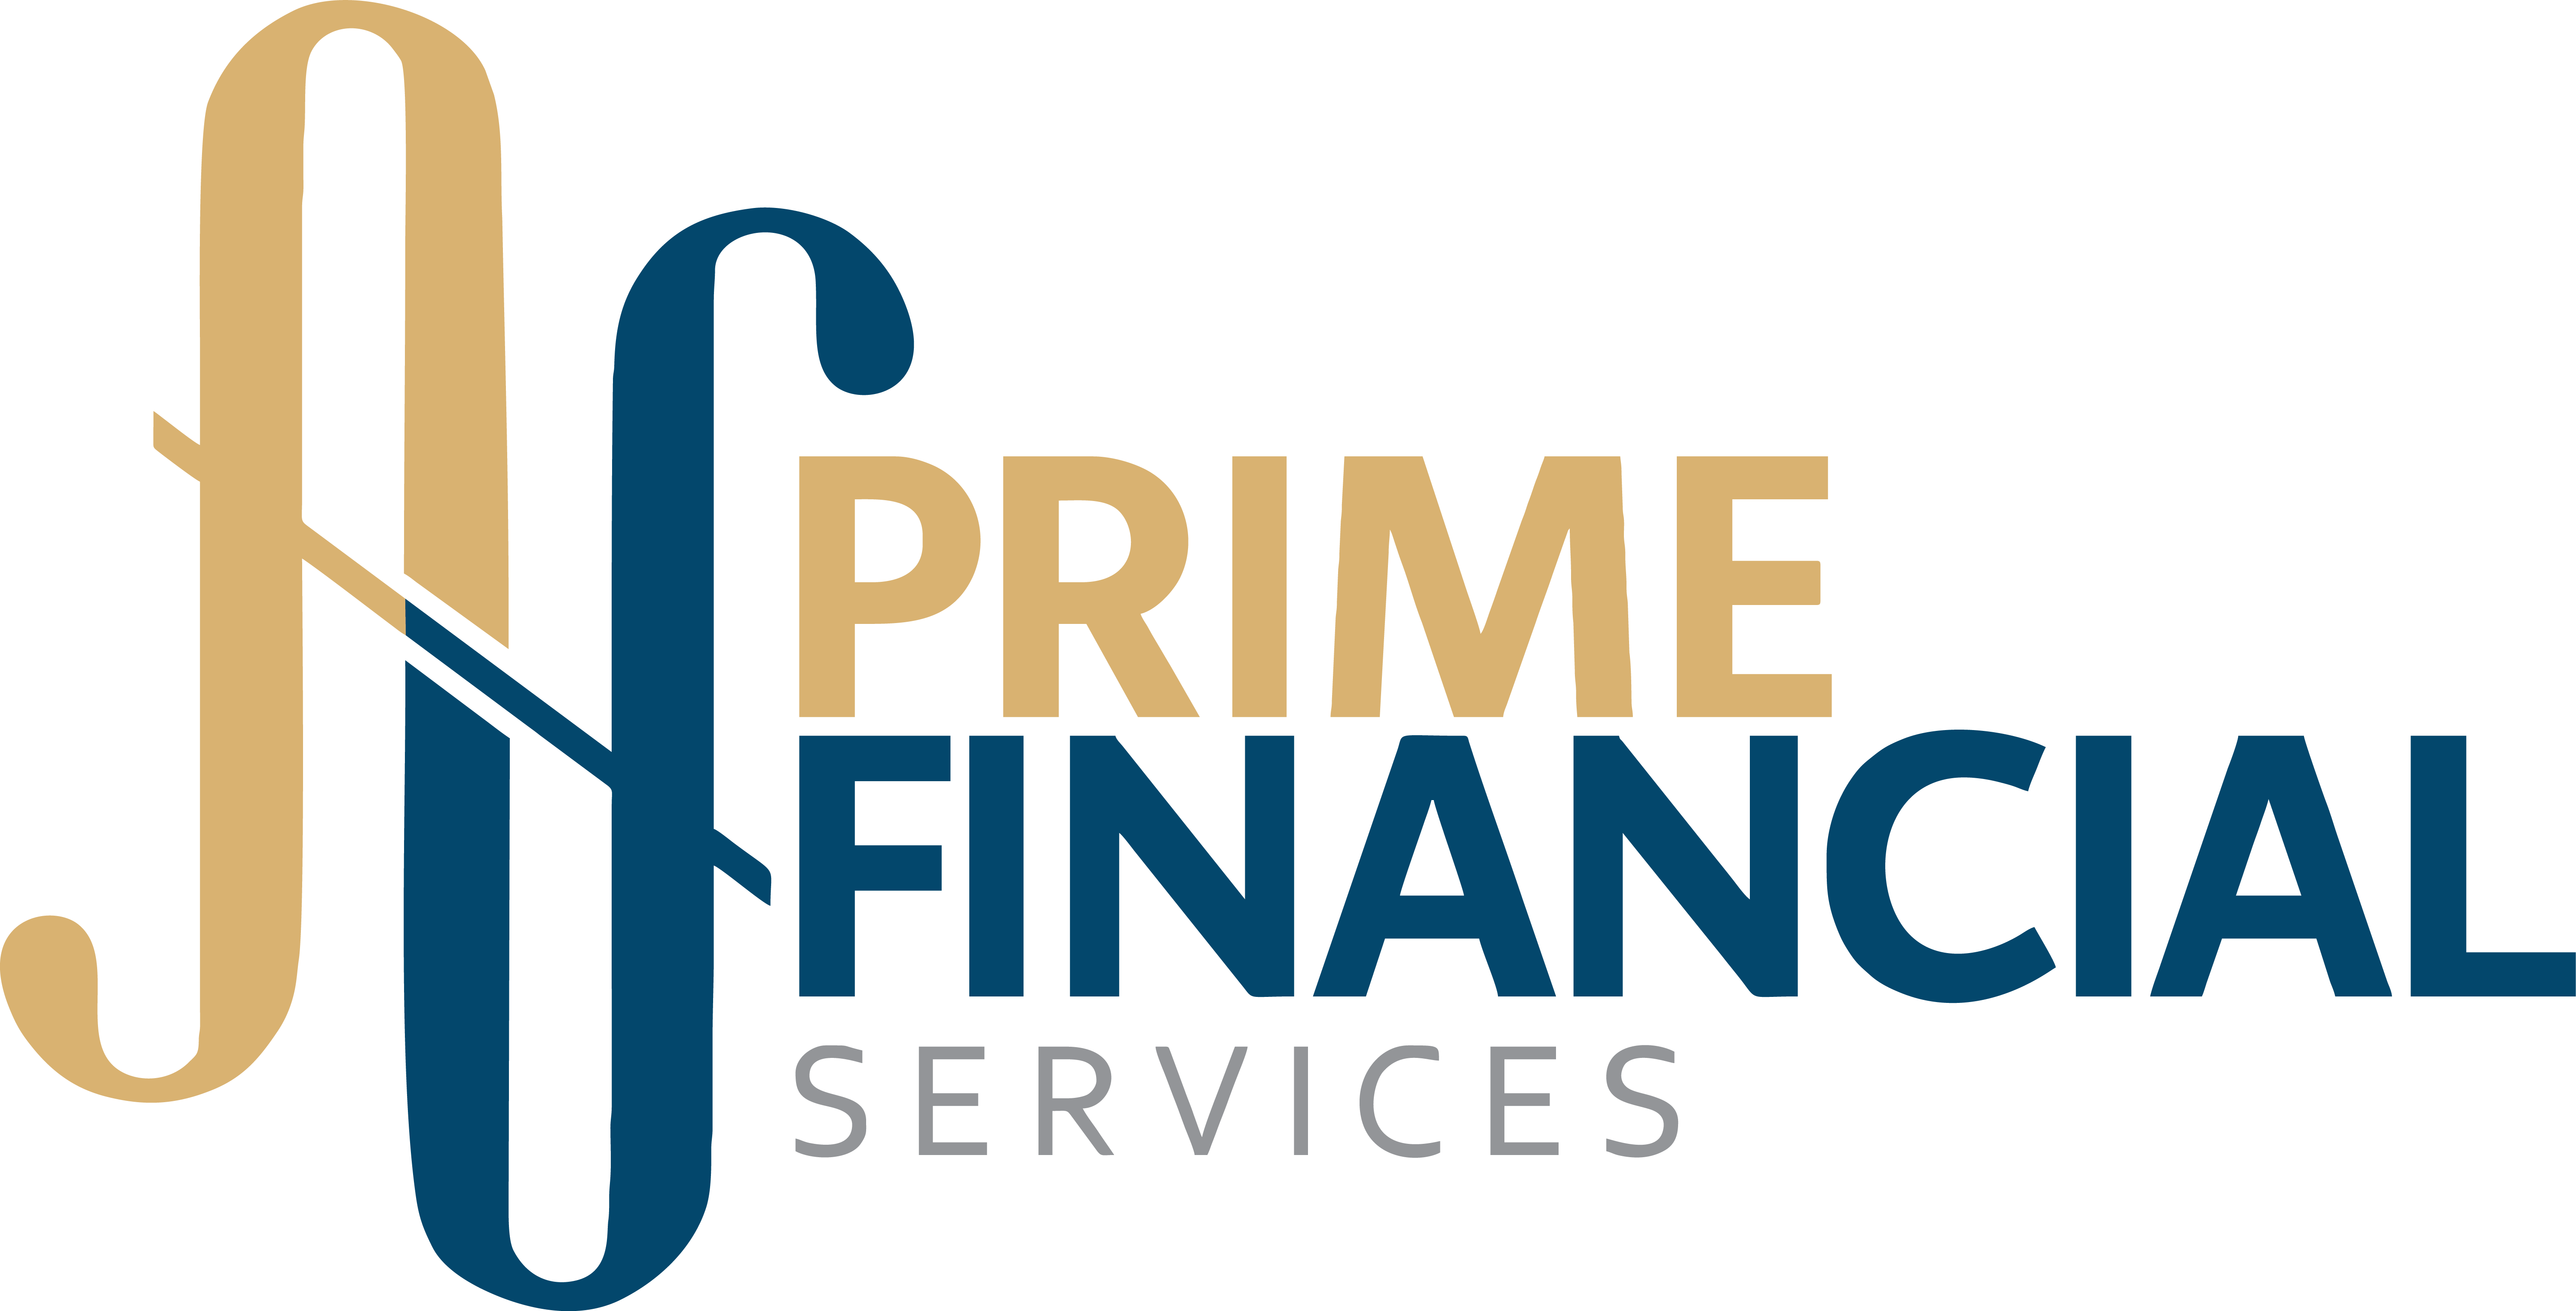 Prime Financial Services